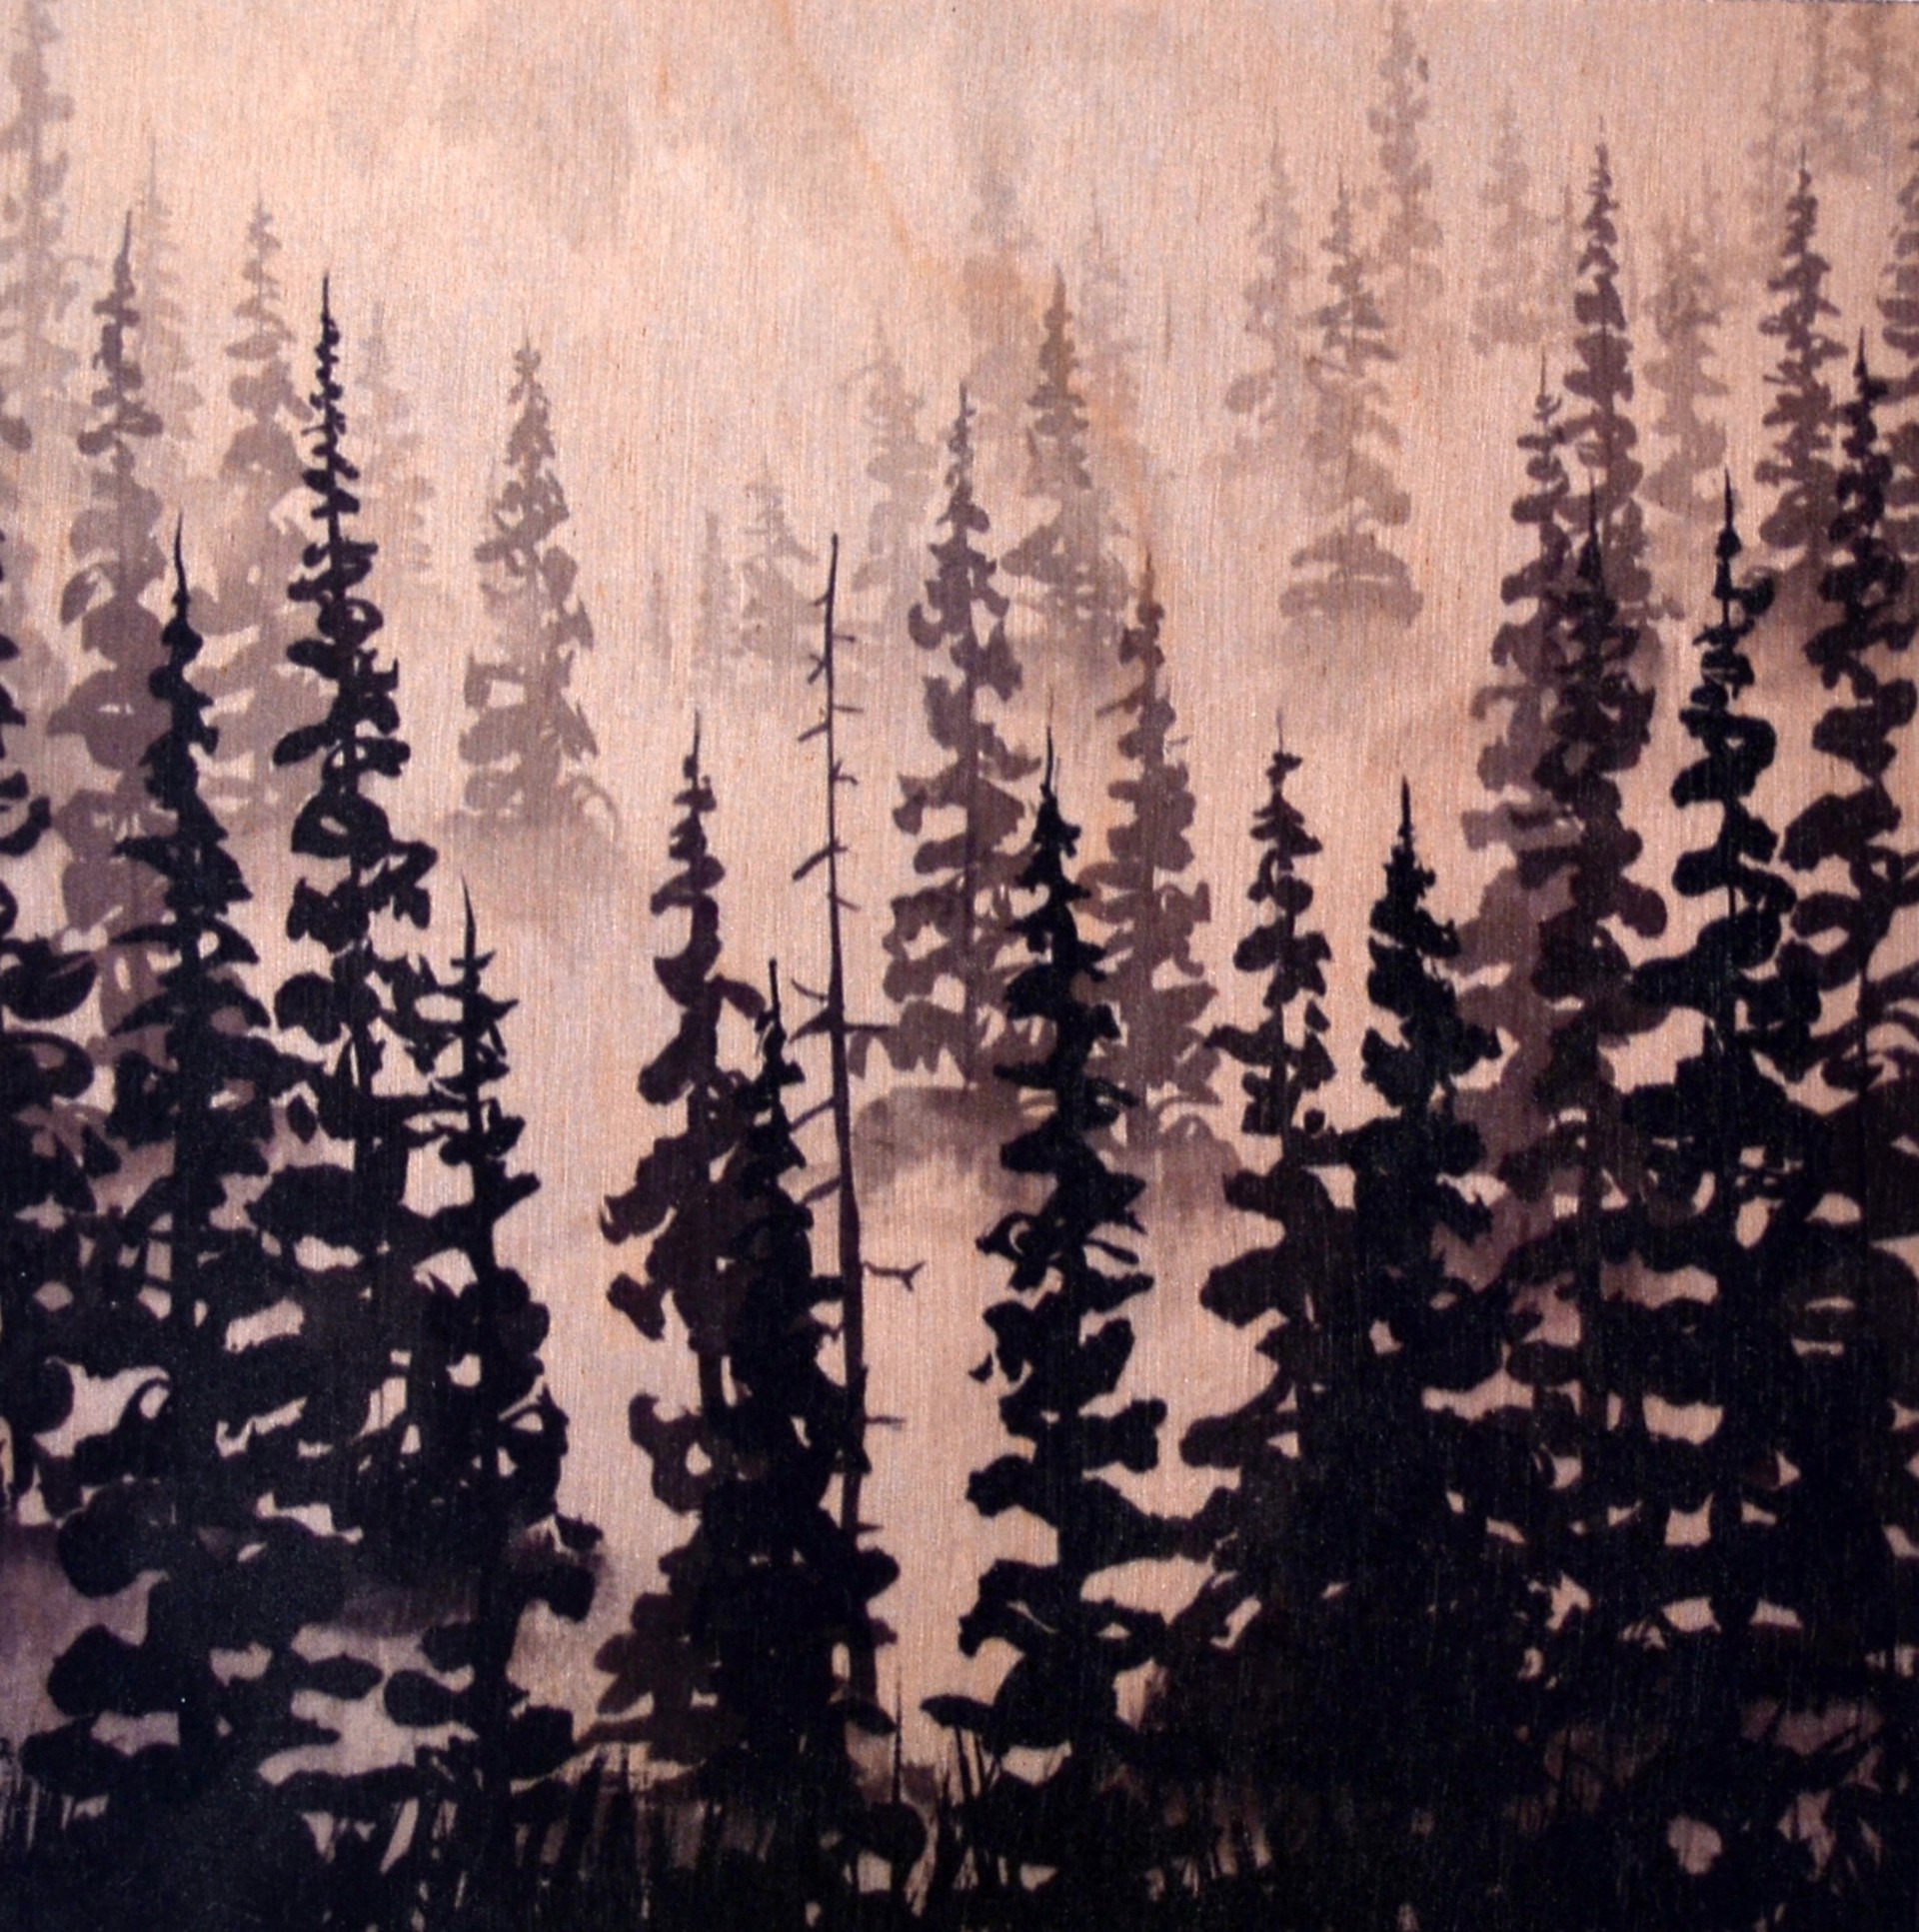 Quiet Pines by Daniel Ryan